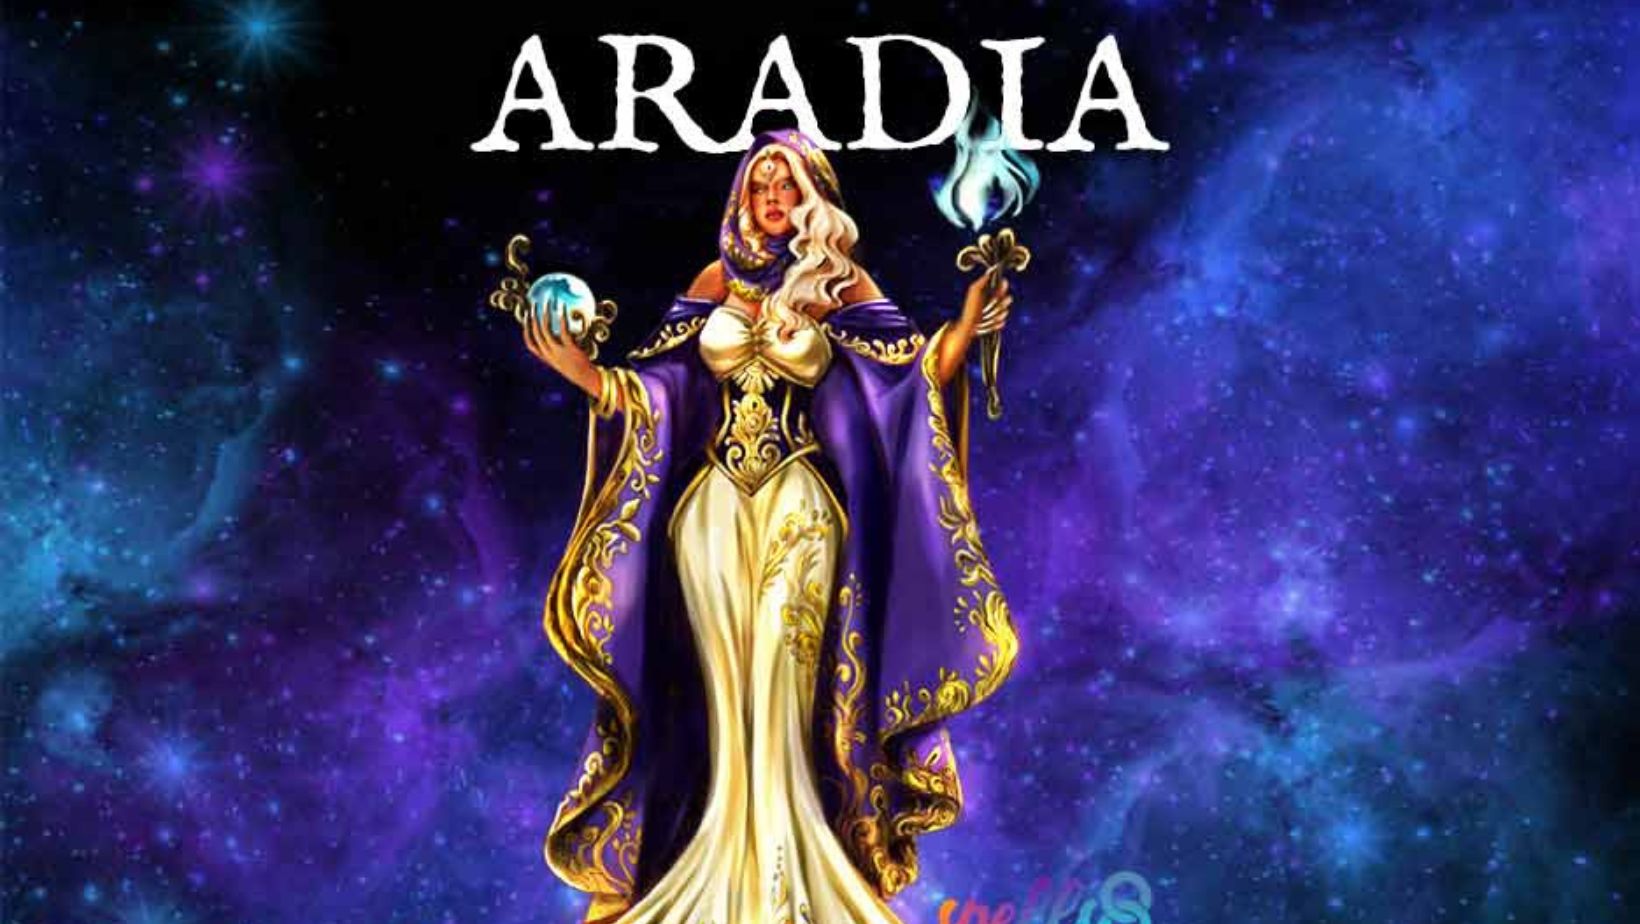 Aradia - Italian Goddess or Wicked Witch